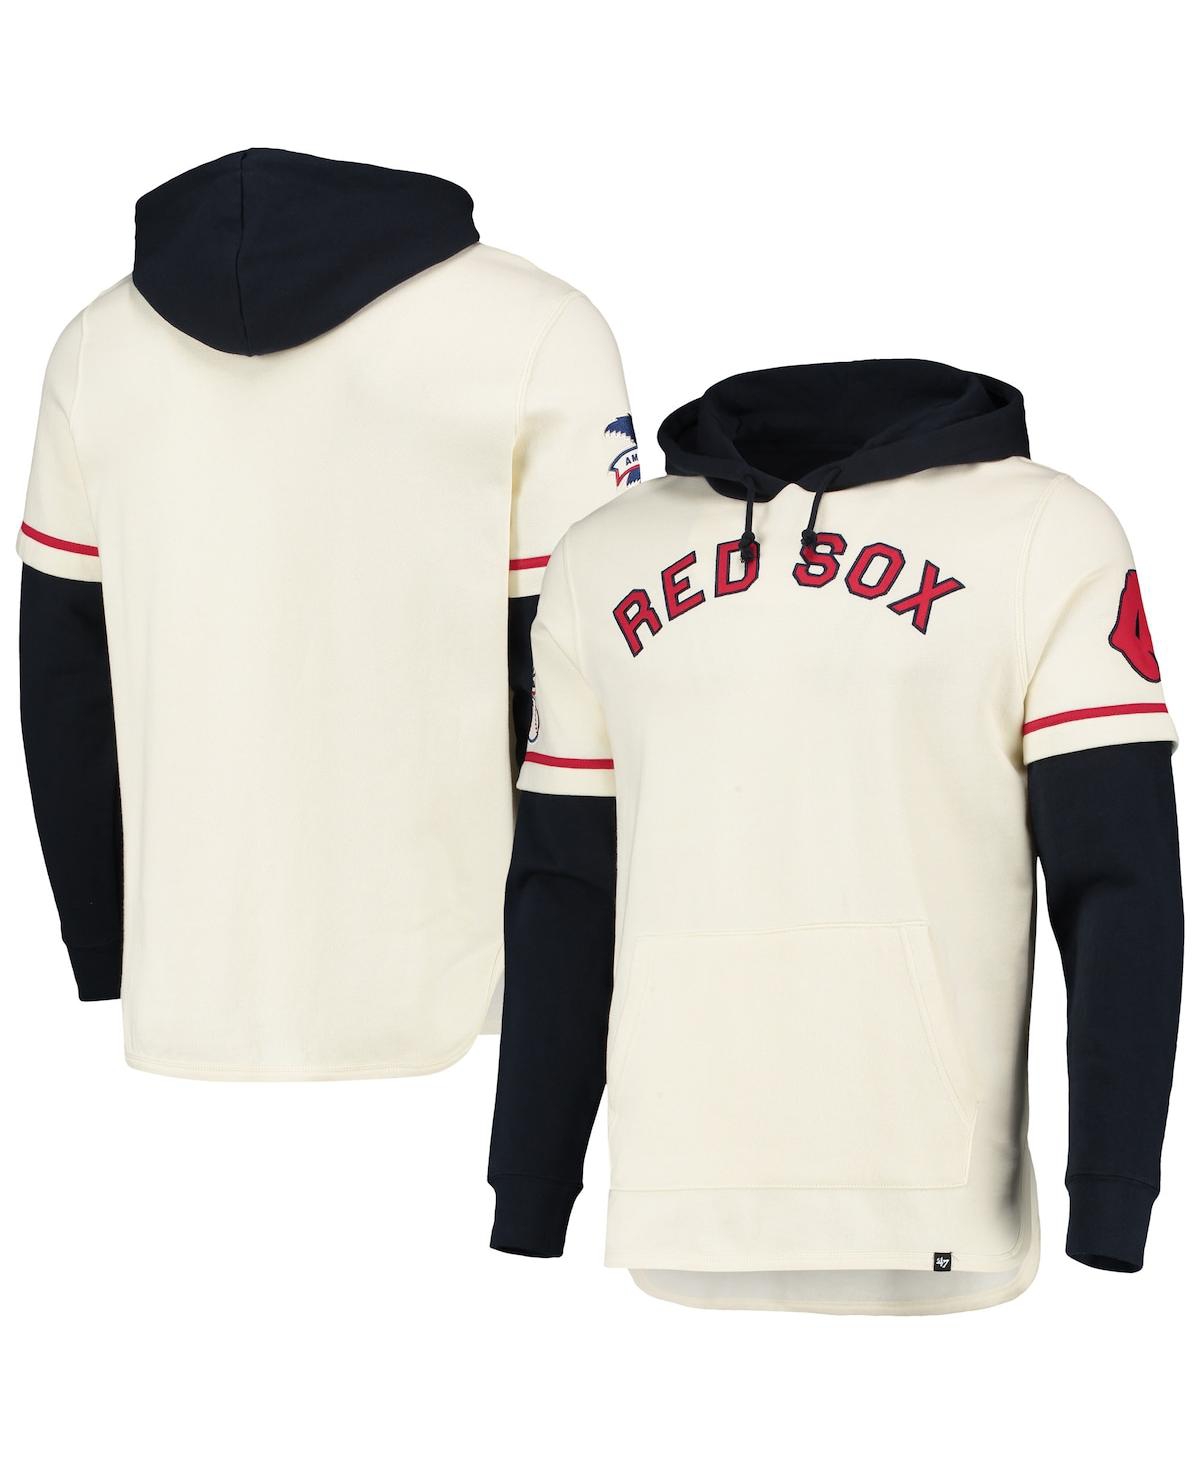 Men's '47 Brand Cream Boston Red Sox Trifecta Shortstop Pullover Hoodie - Cream